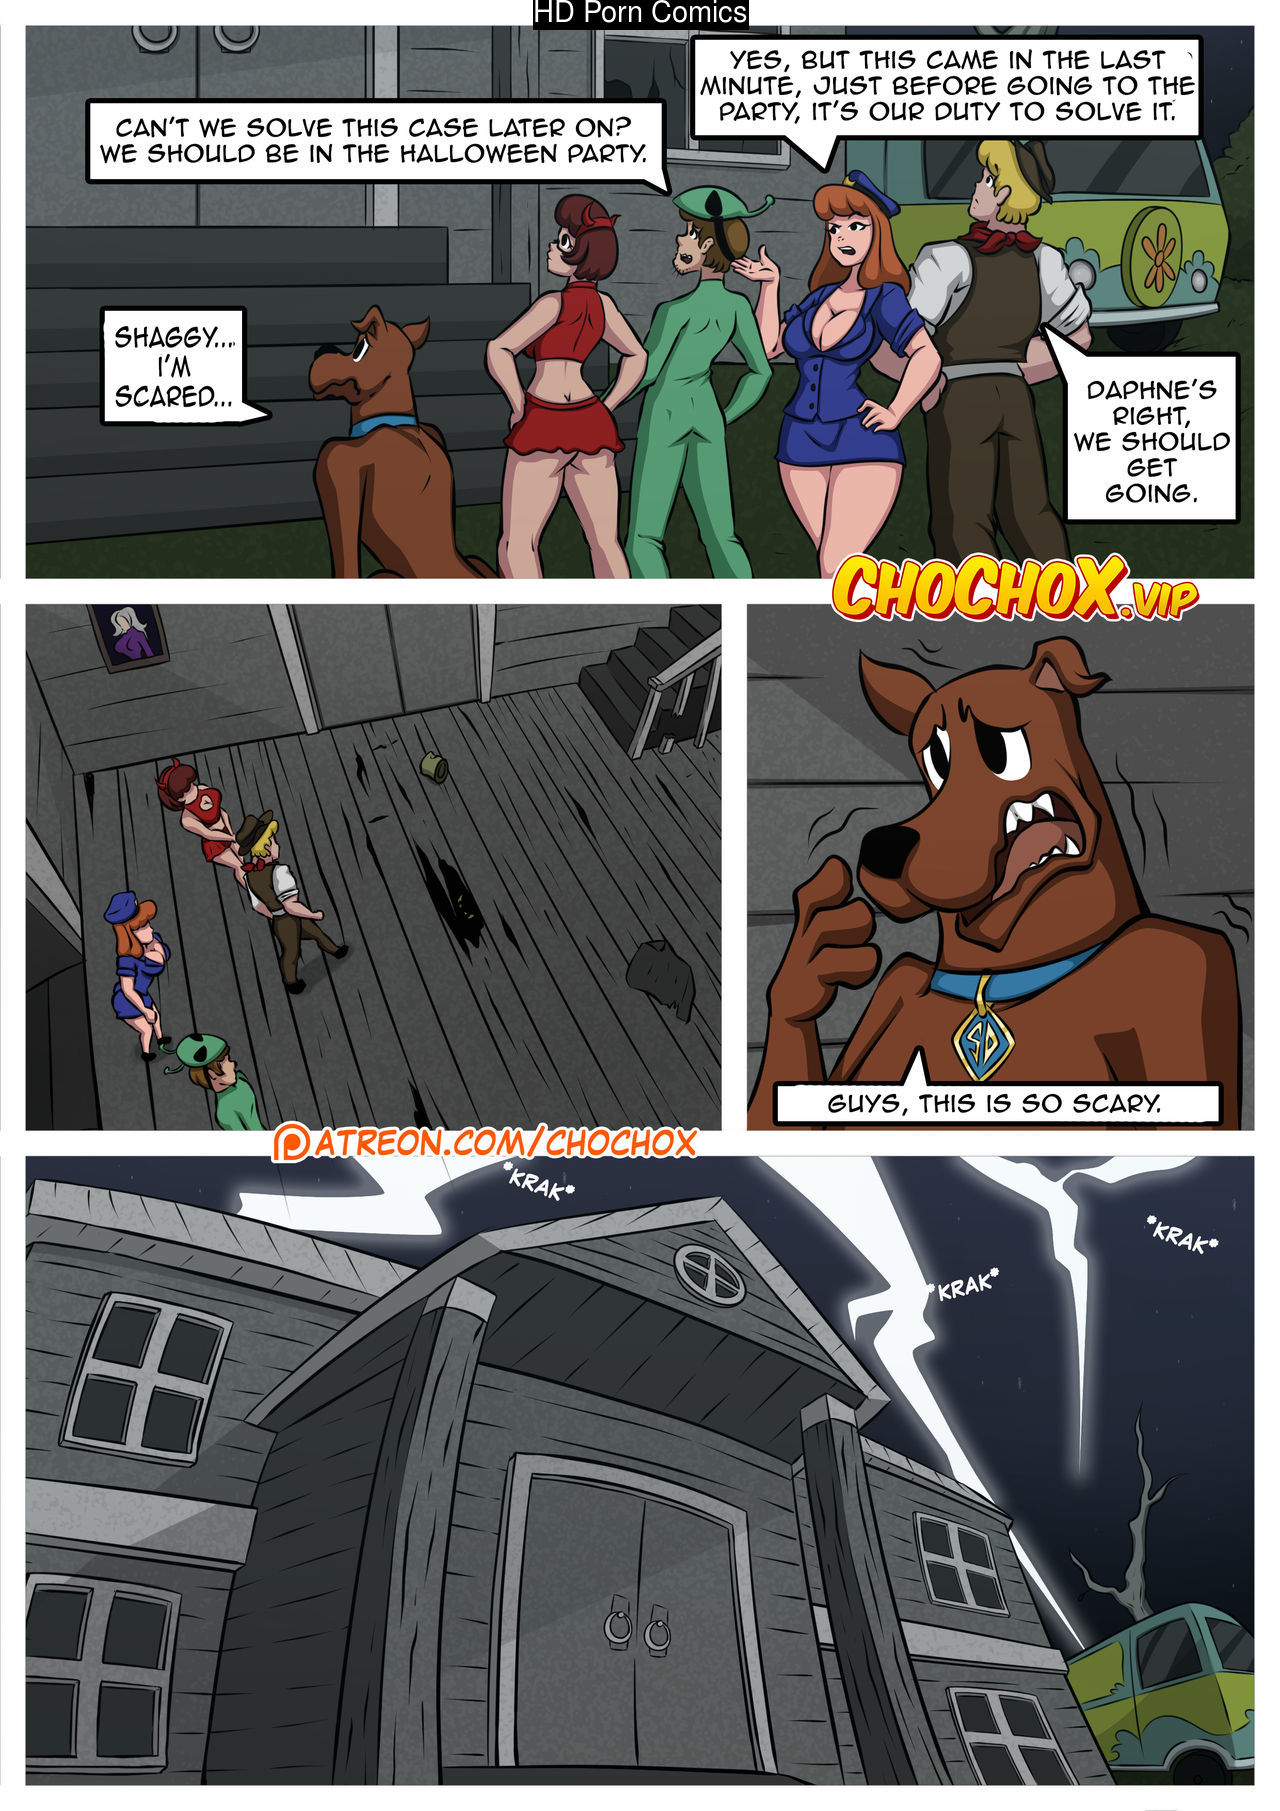 Scooby Doo Furry Transformation Porn - Scooby Doo - The Halloween Night comic porn - HD Porn Comics